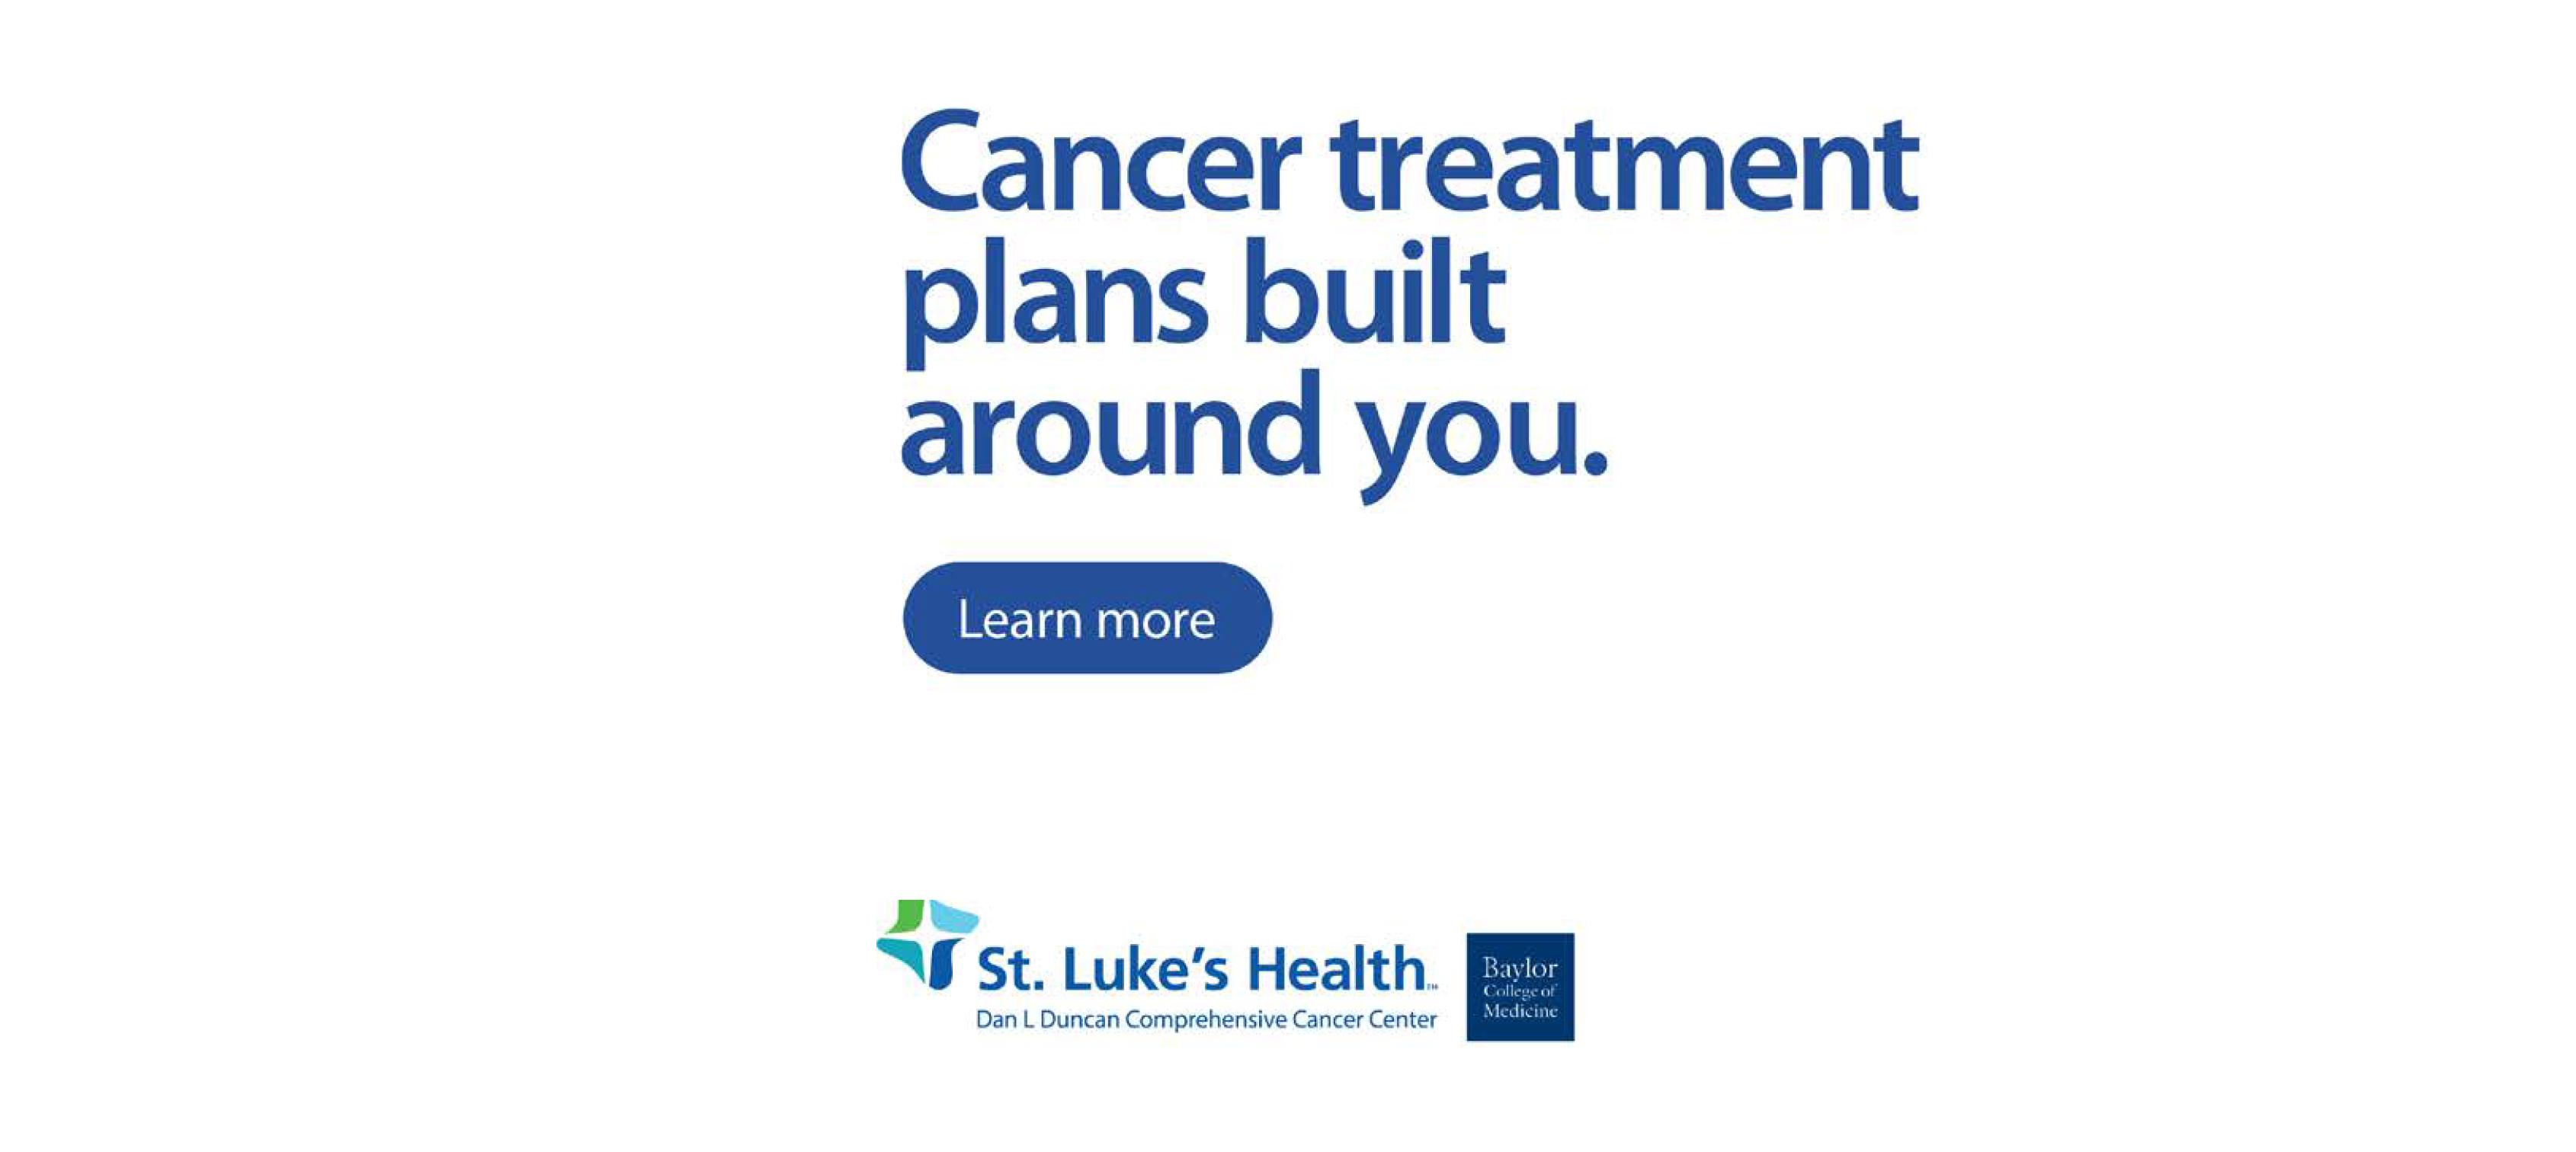 Cancer treatment plans built around you.